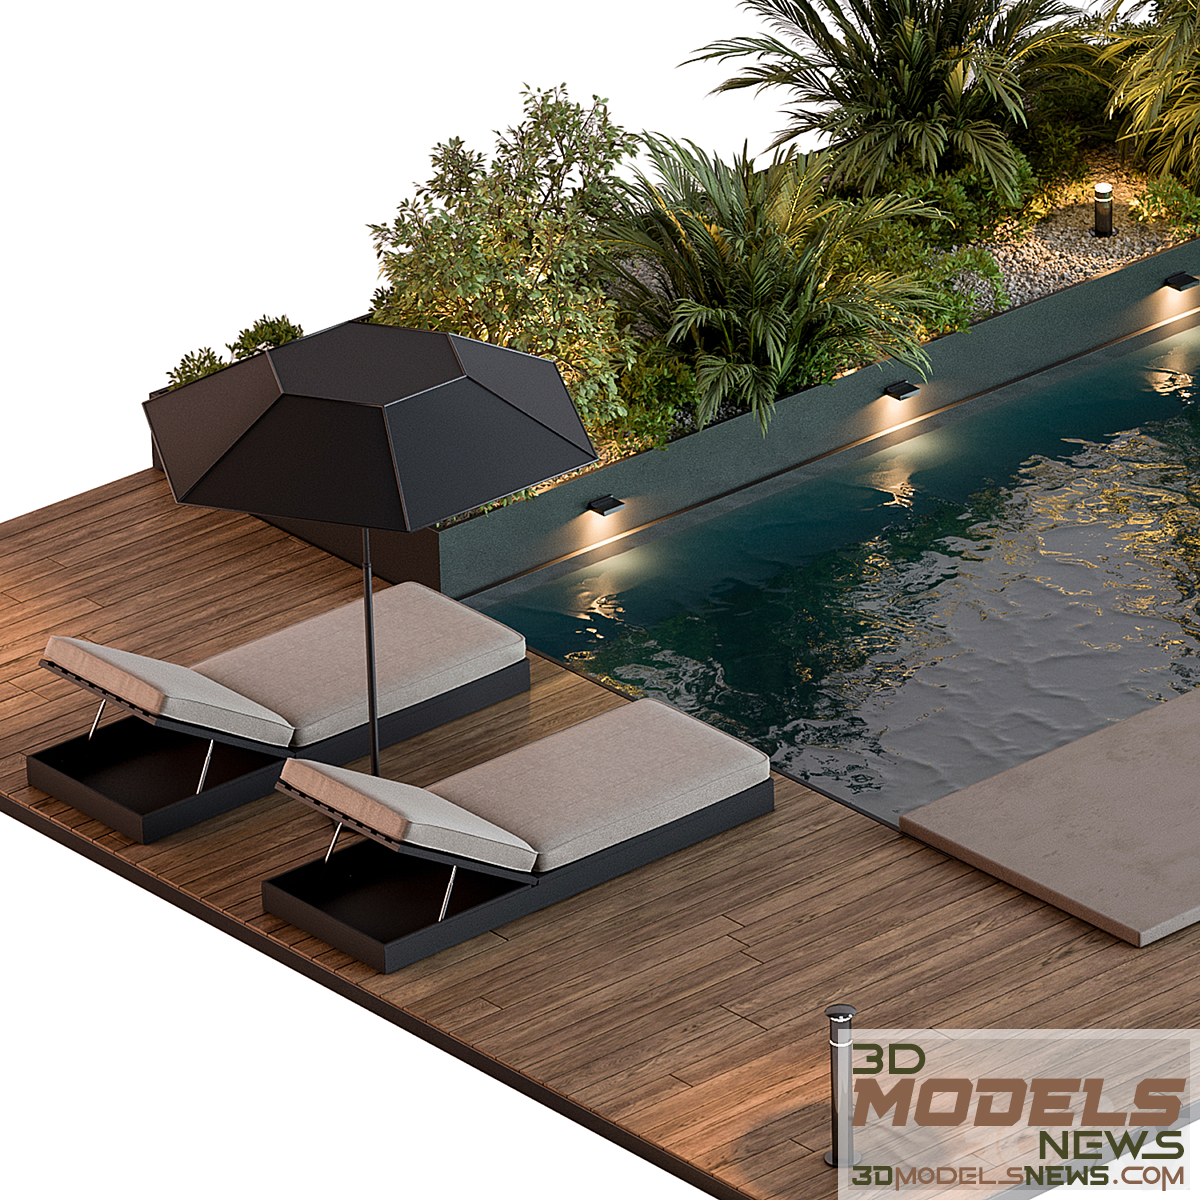 Landscape furniture model with pool 69 2